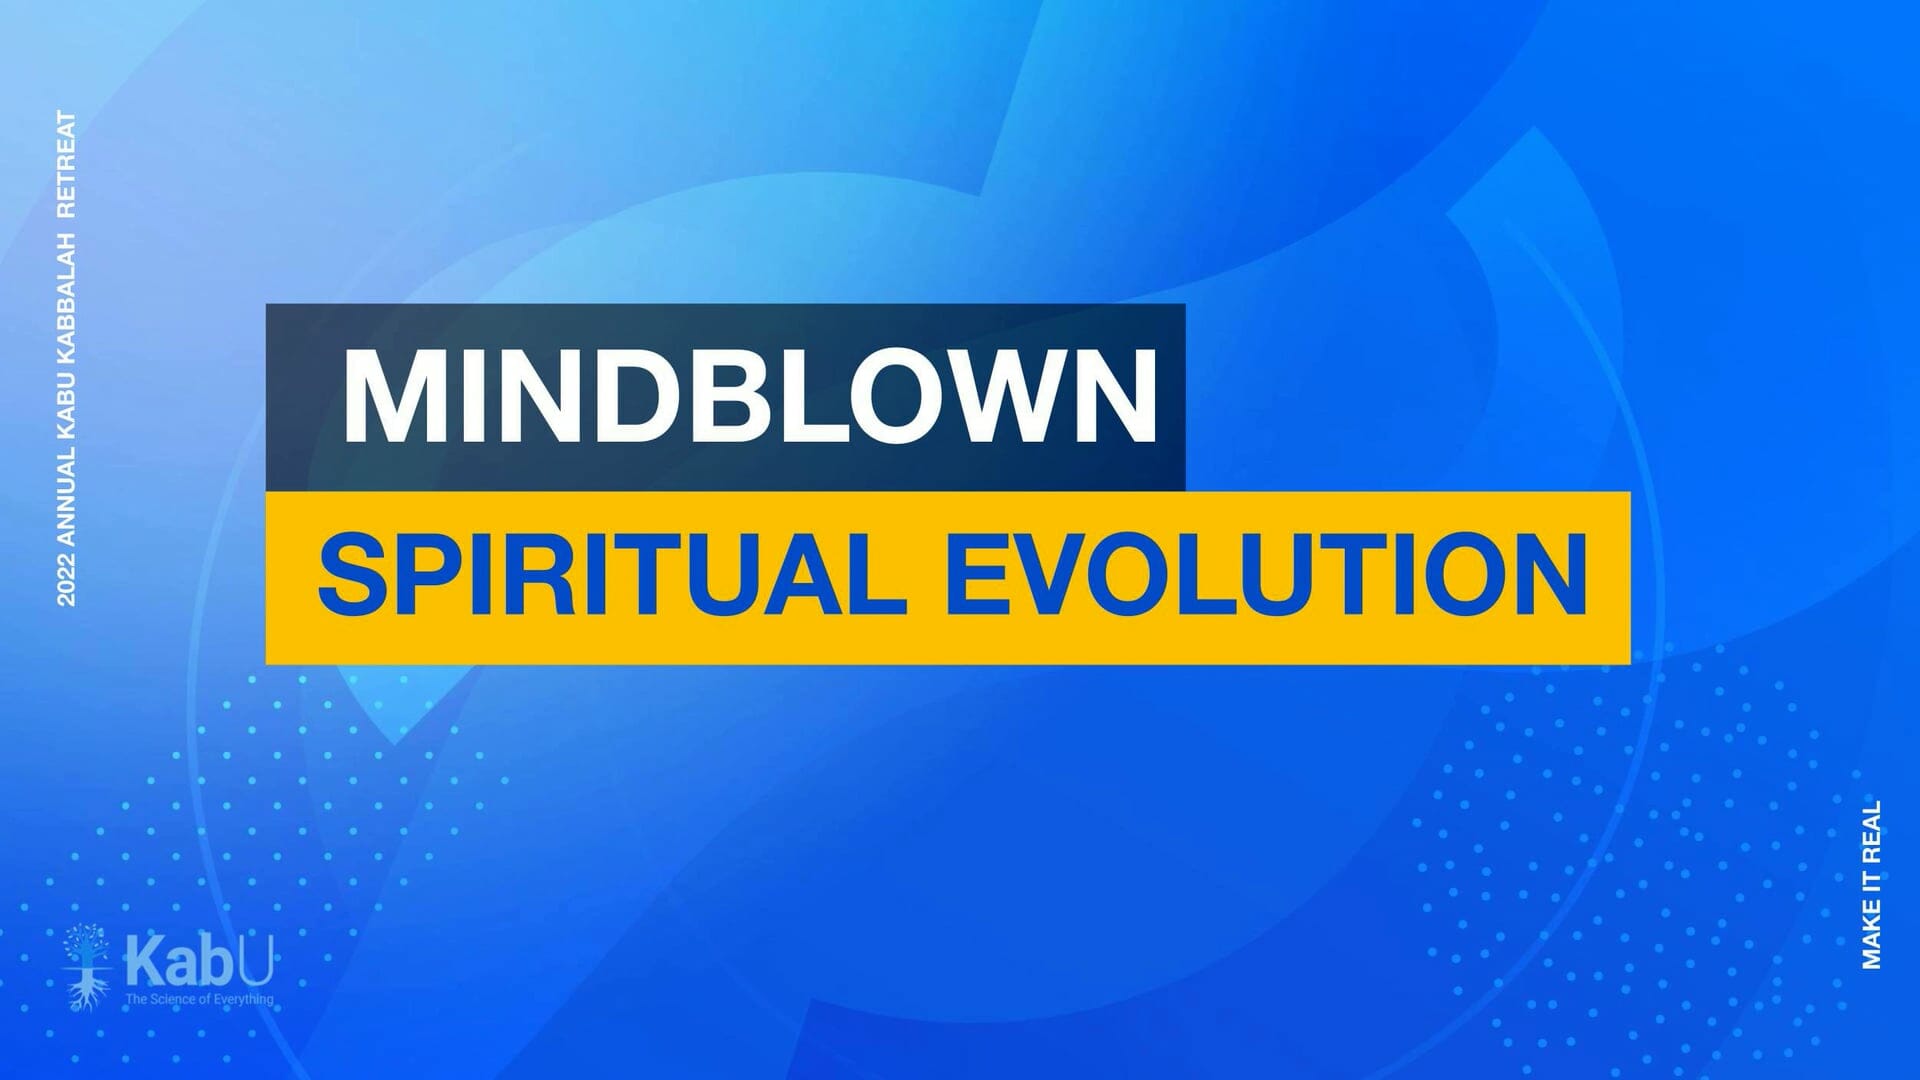 Sept 9, 2022 – Mindblown Spiritual Evolution